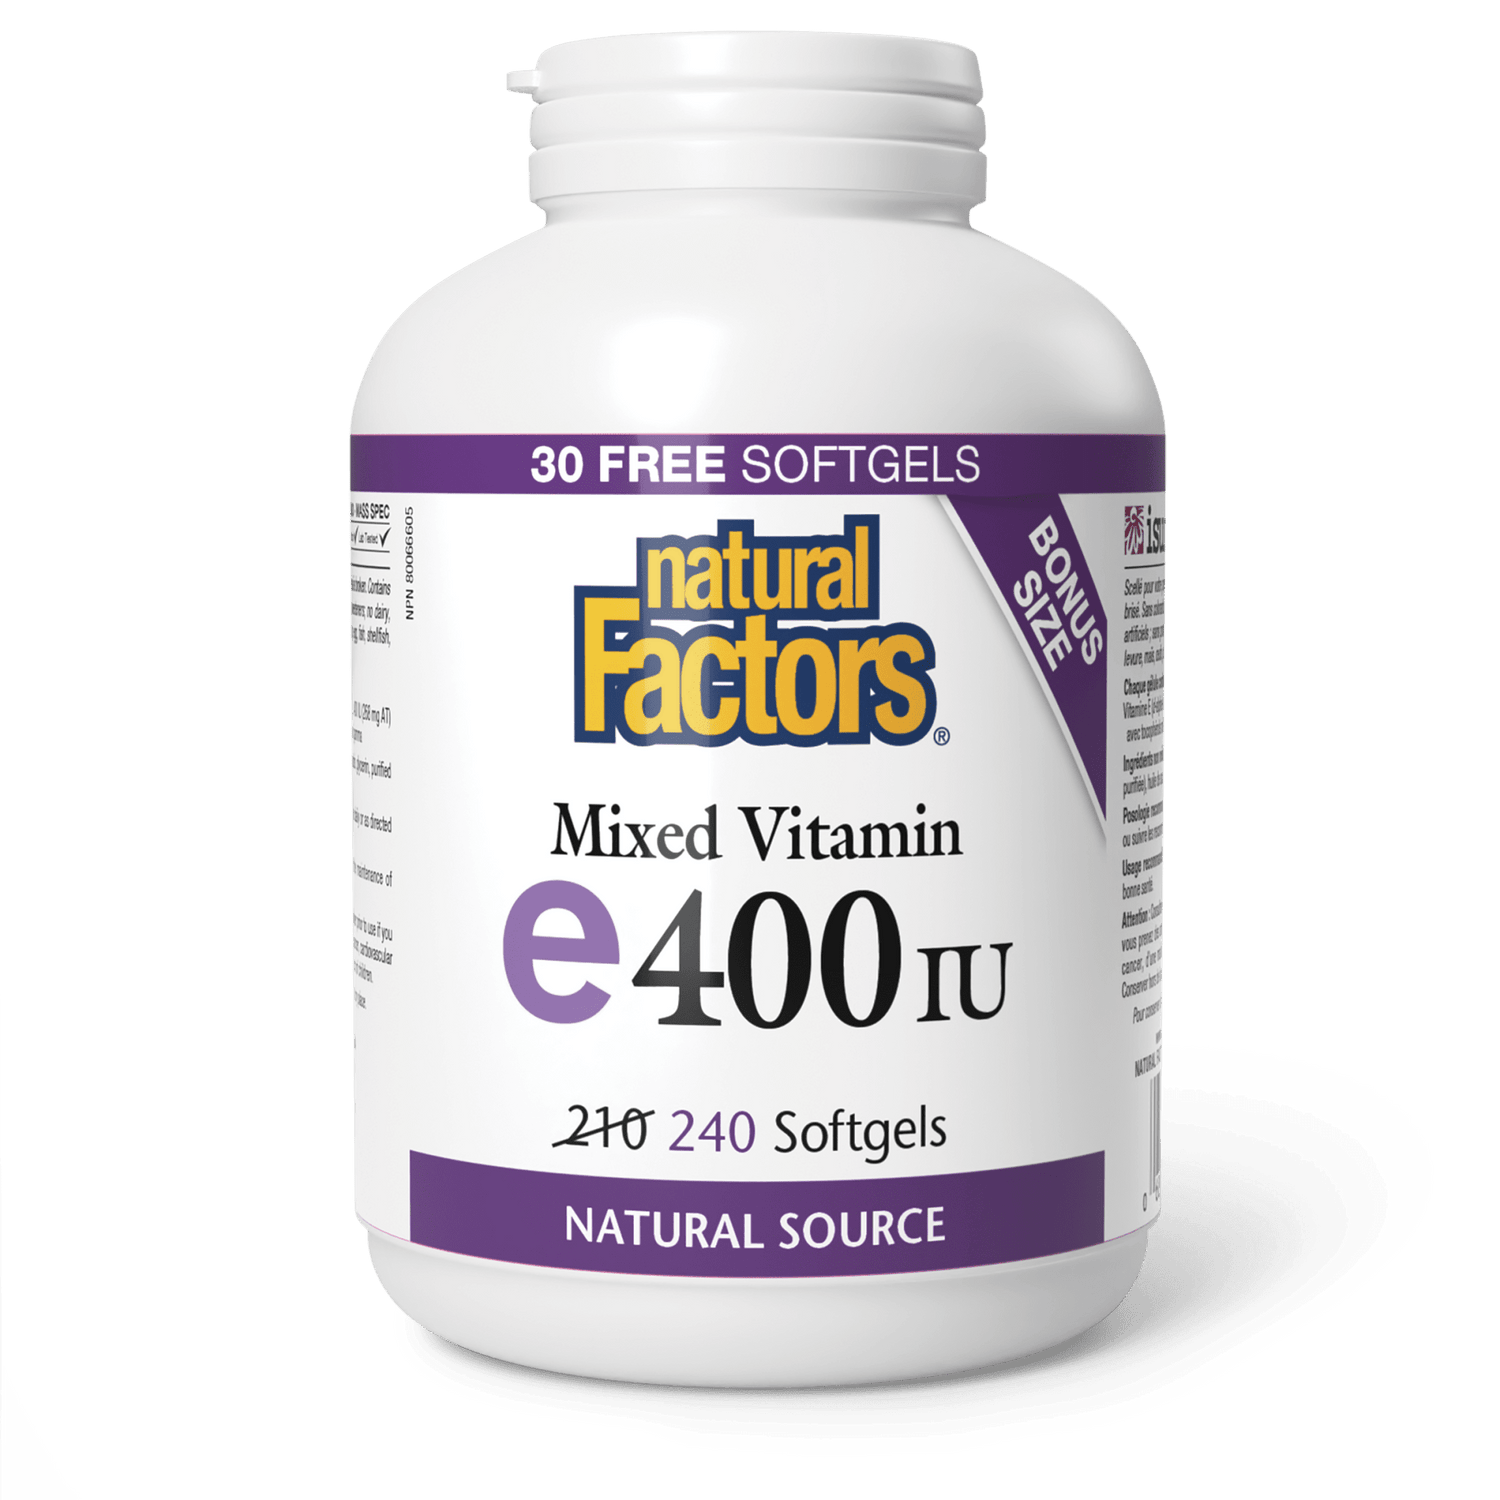 Mixed Vitamin E 400 IU, Natural source, Natural Factors|v|image|8142